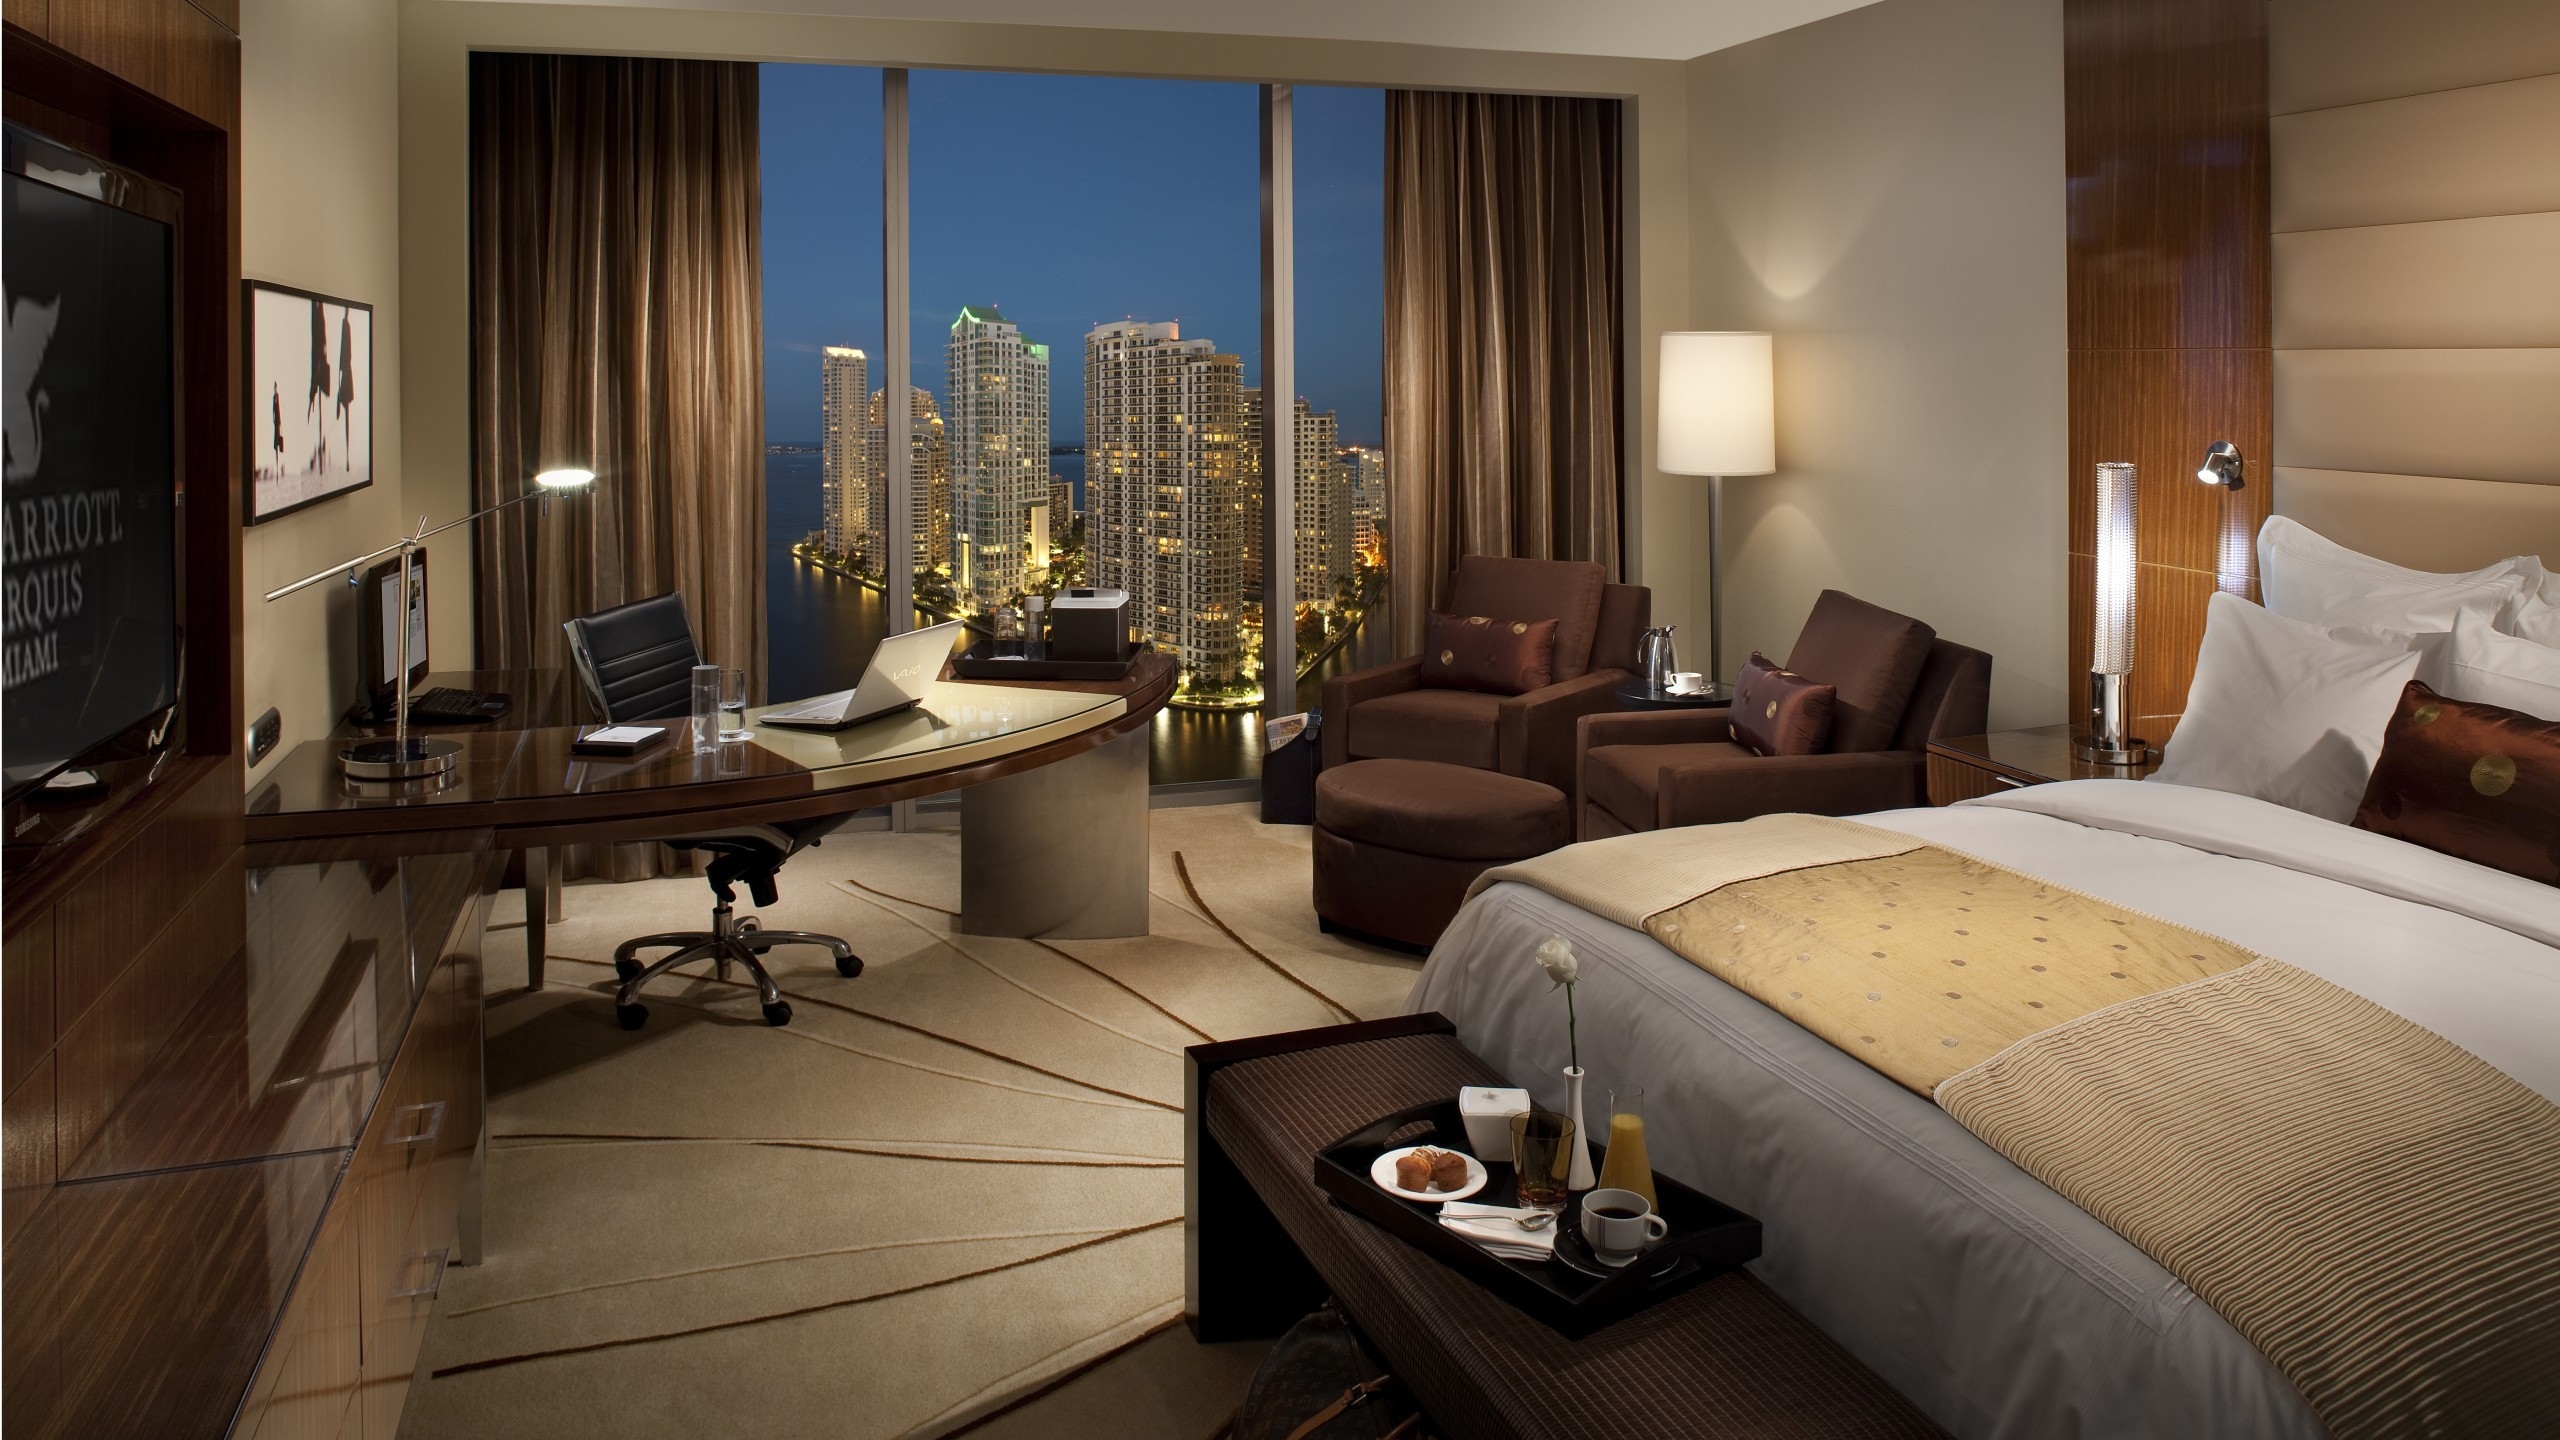 Miami Florida Hotel Room for 2560x1440 HDTV resolution